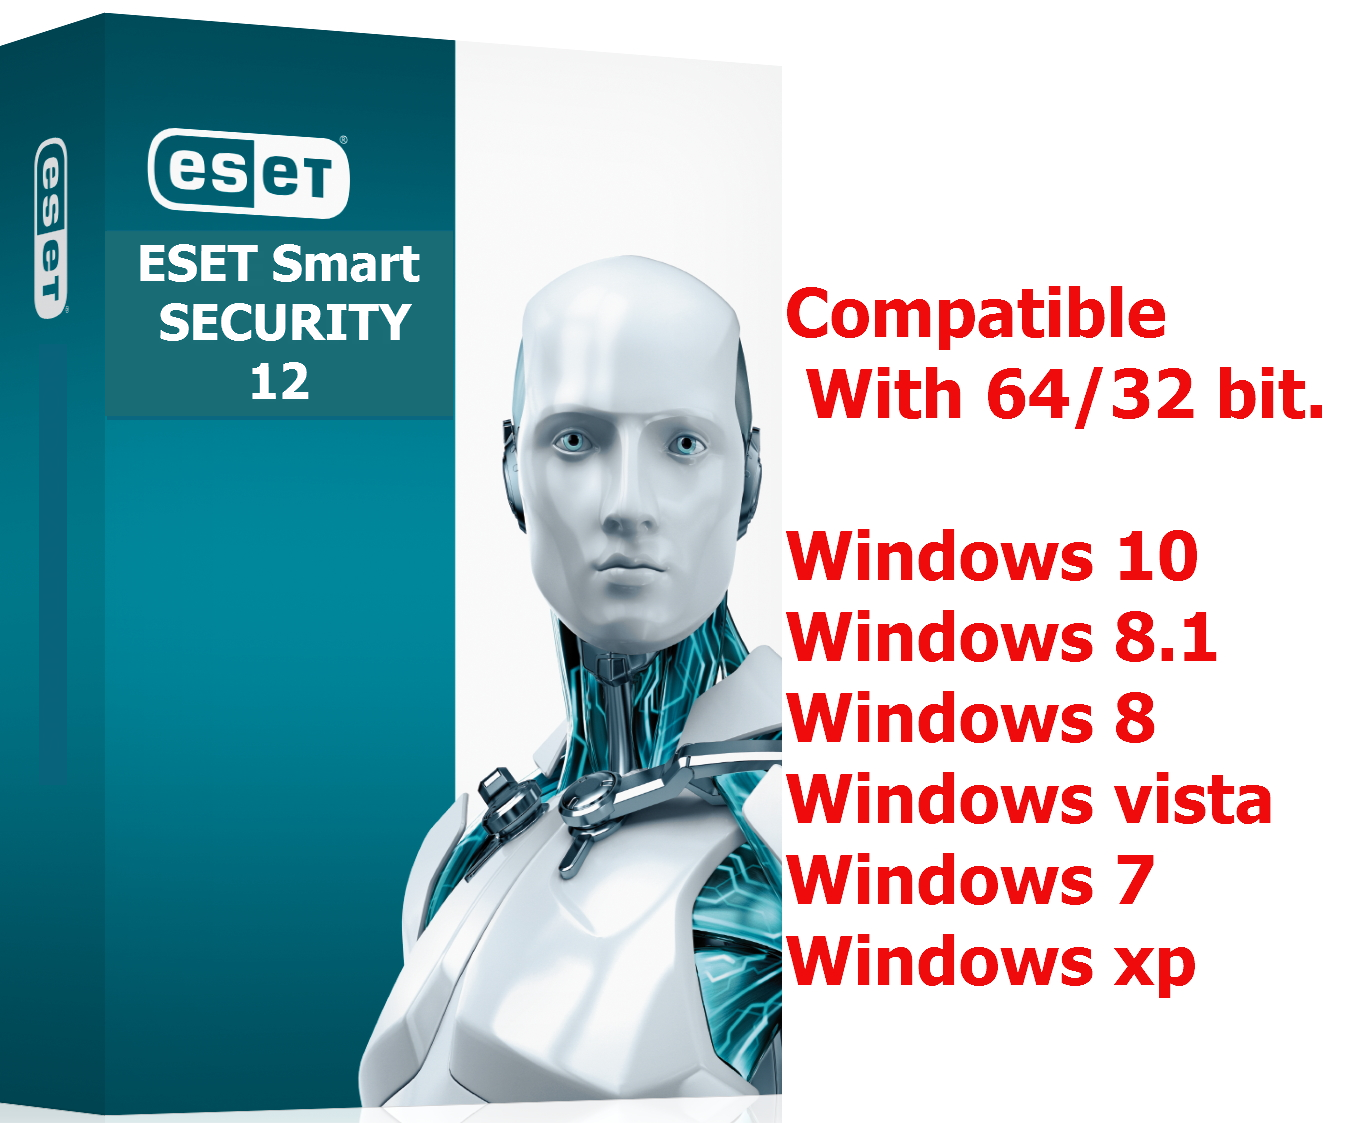 eset smart security 12 license key 2020